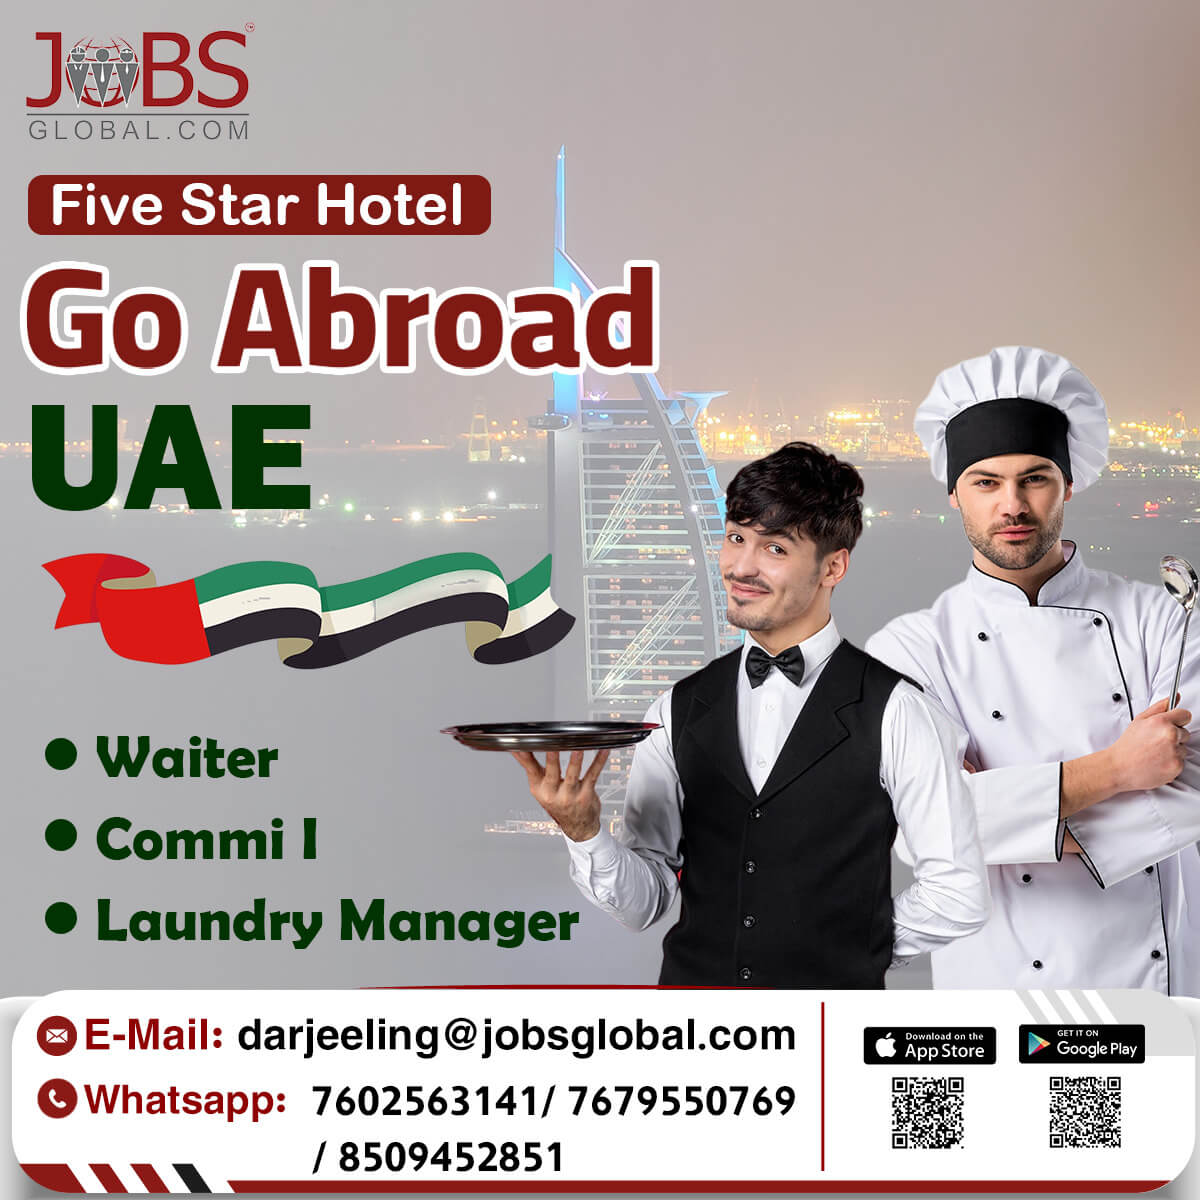 5 STAR HOTEL IN UAE